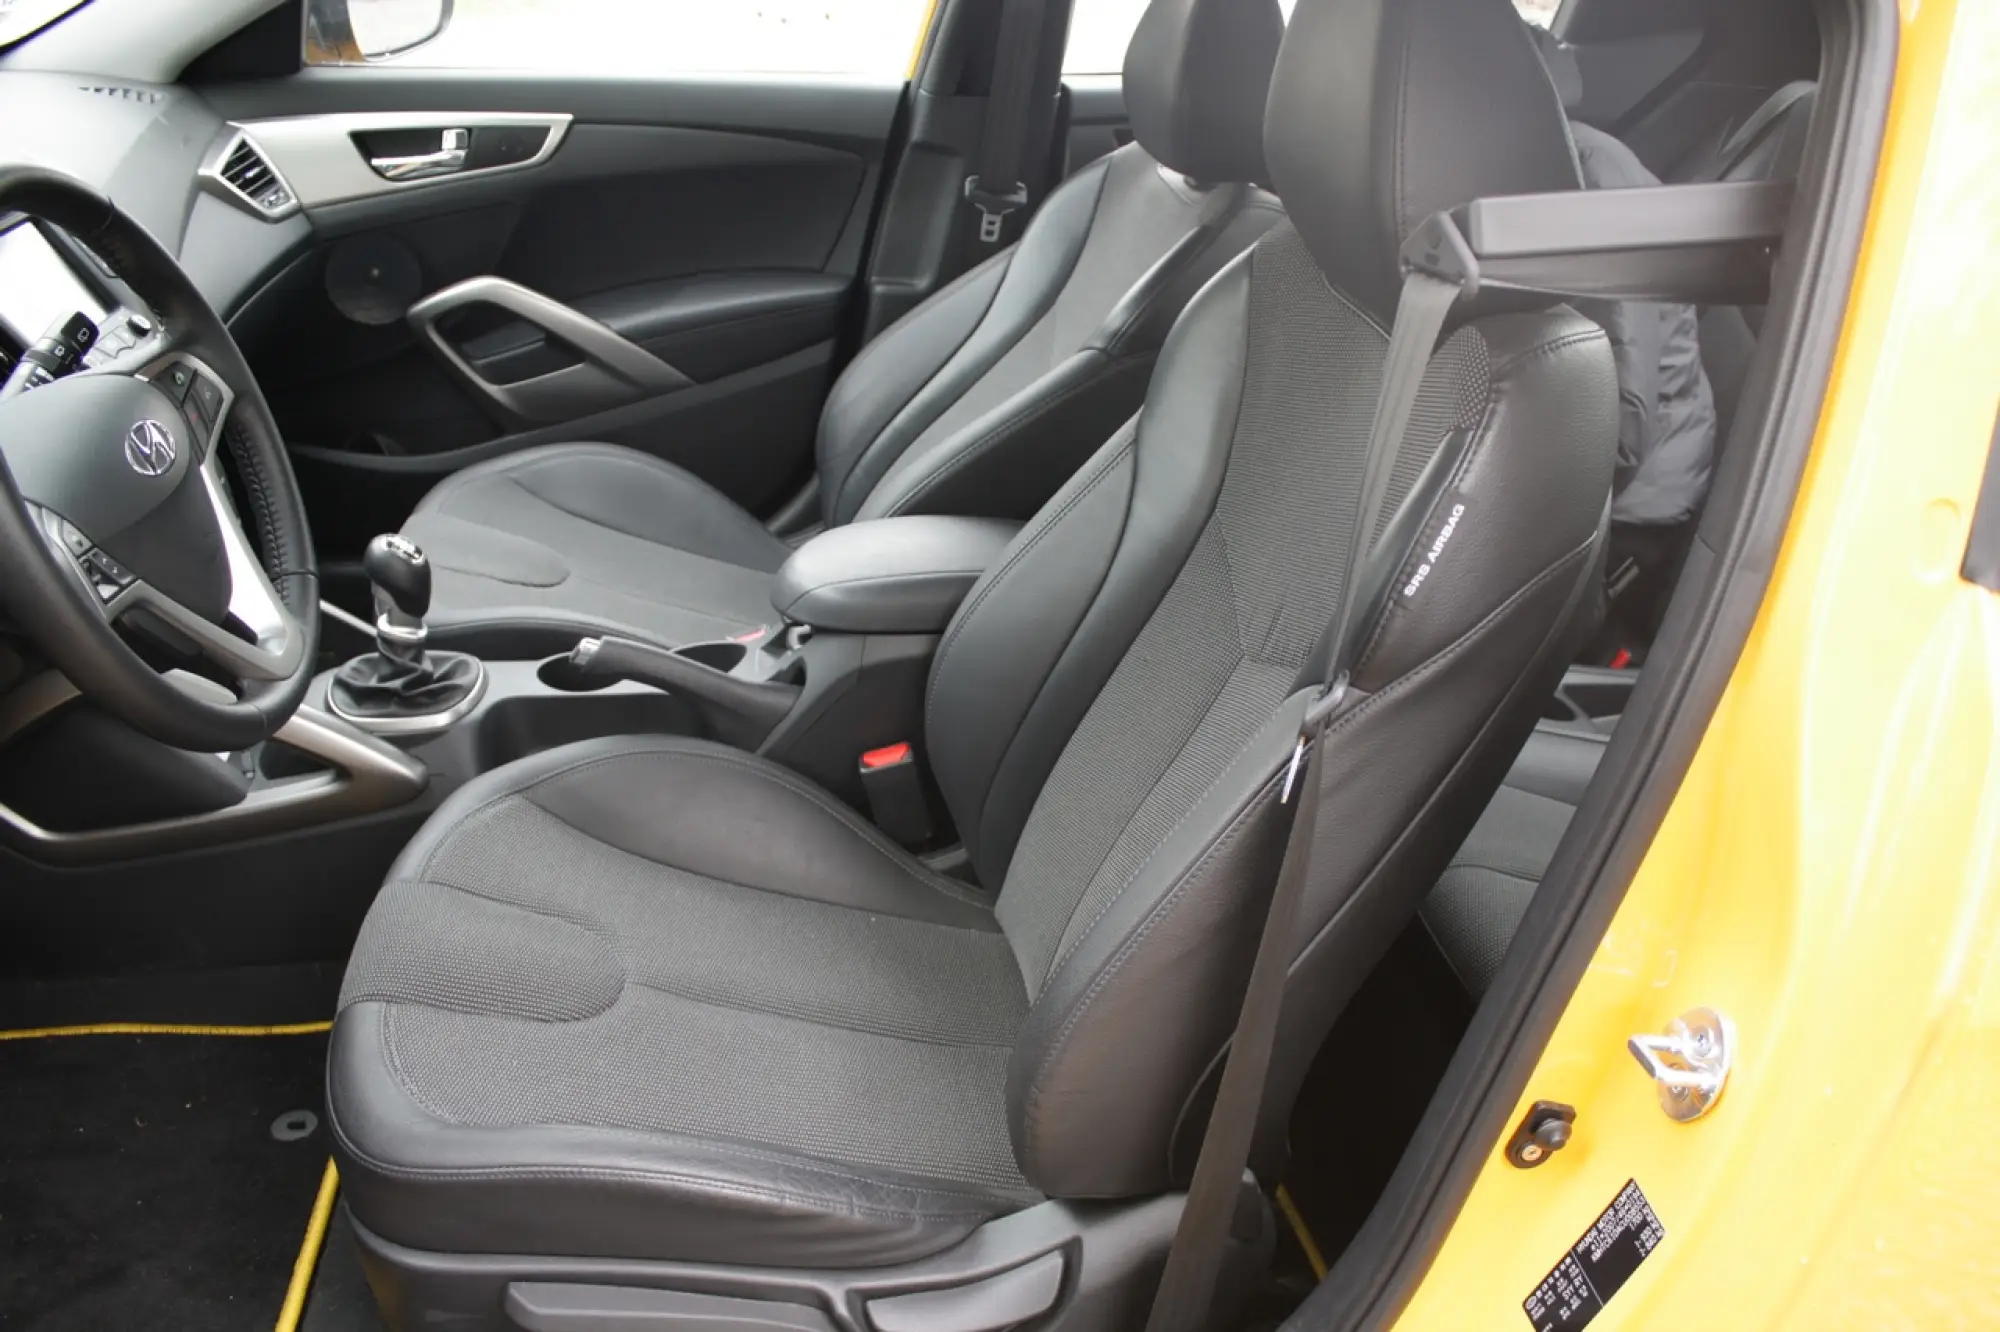 Hyundai Veloster - Test Drive 2012 - 83